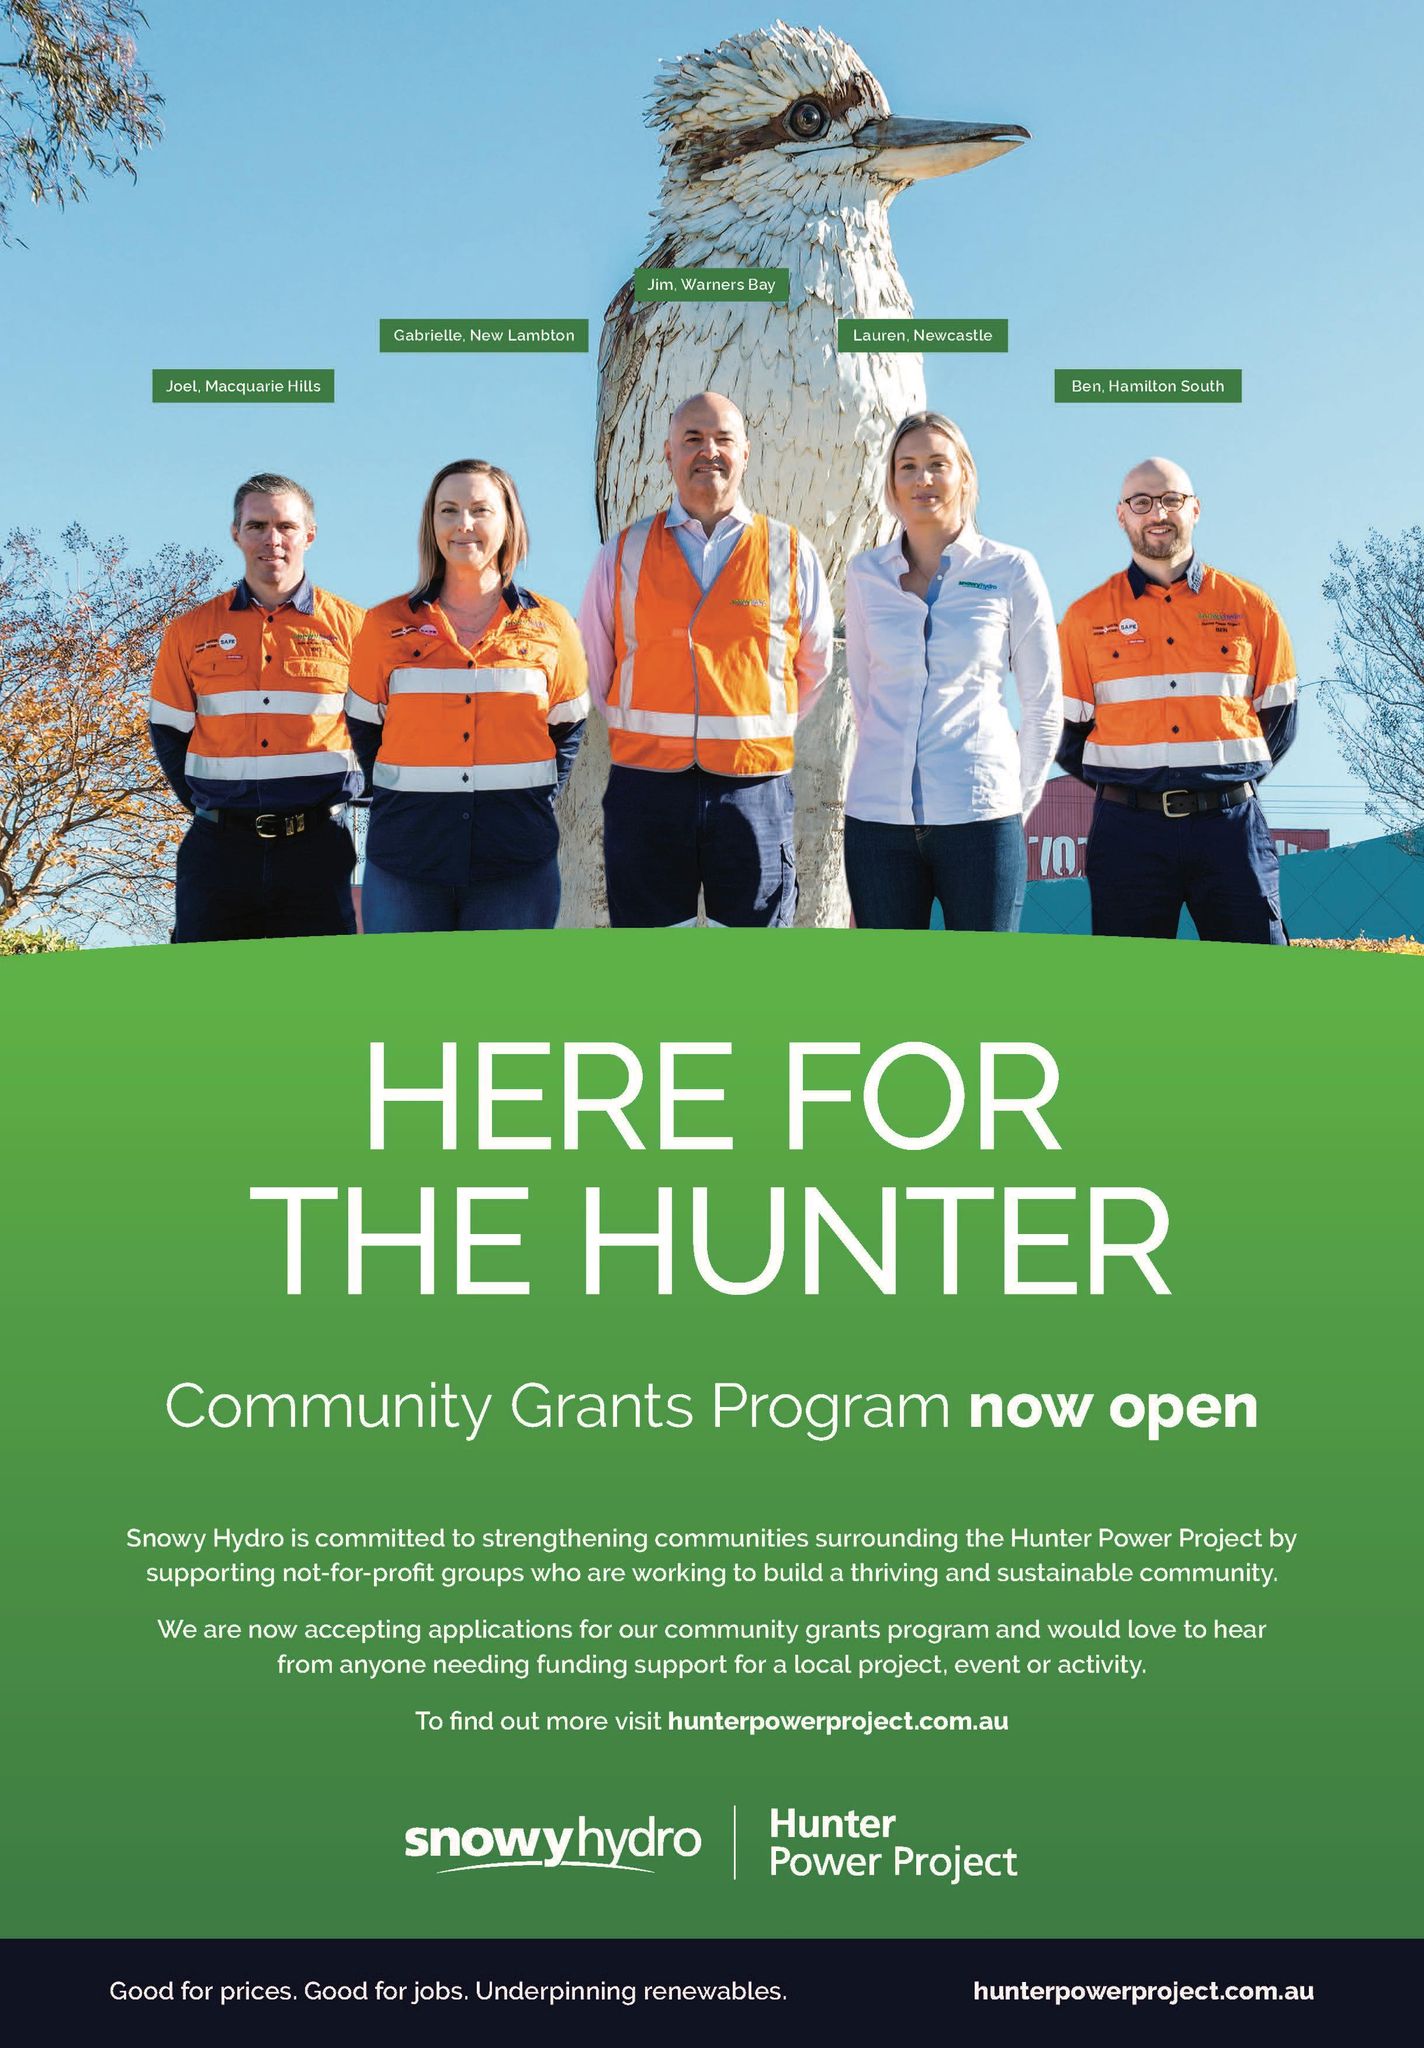 Hunter Power Community Grant